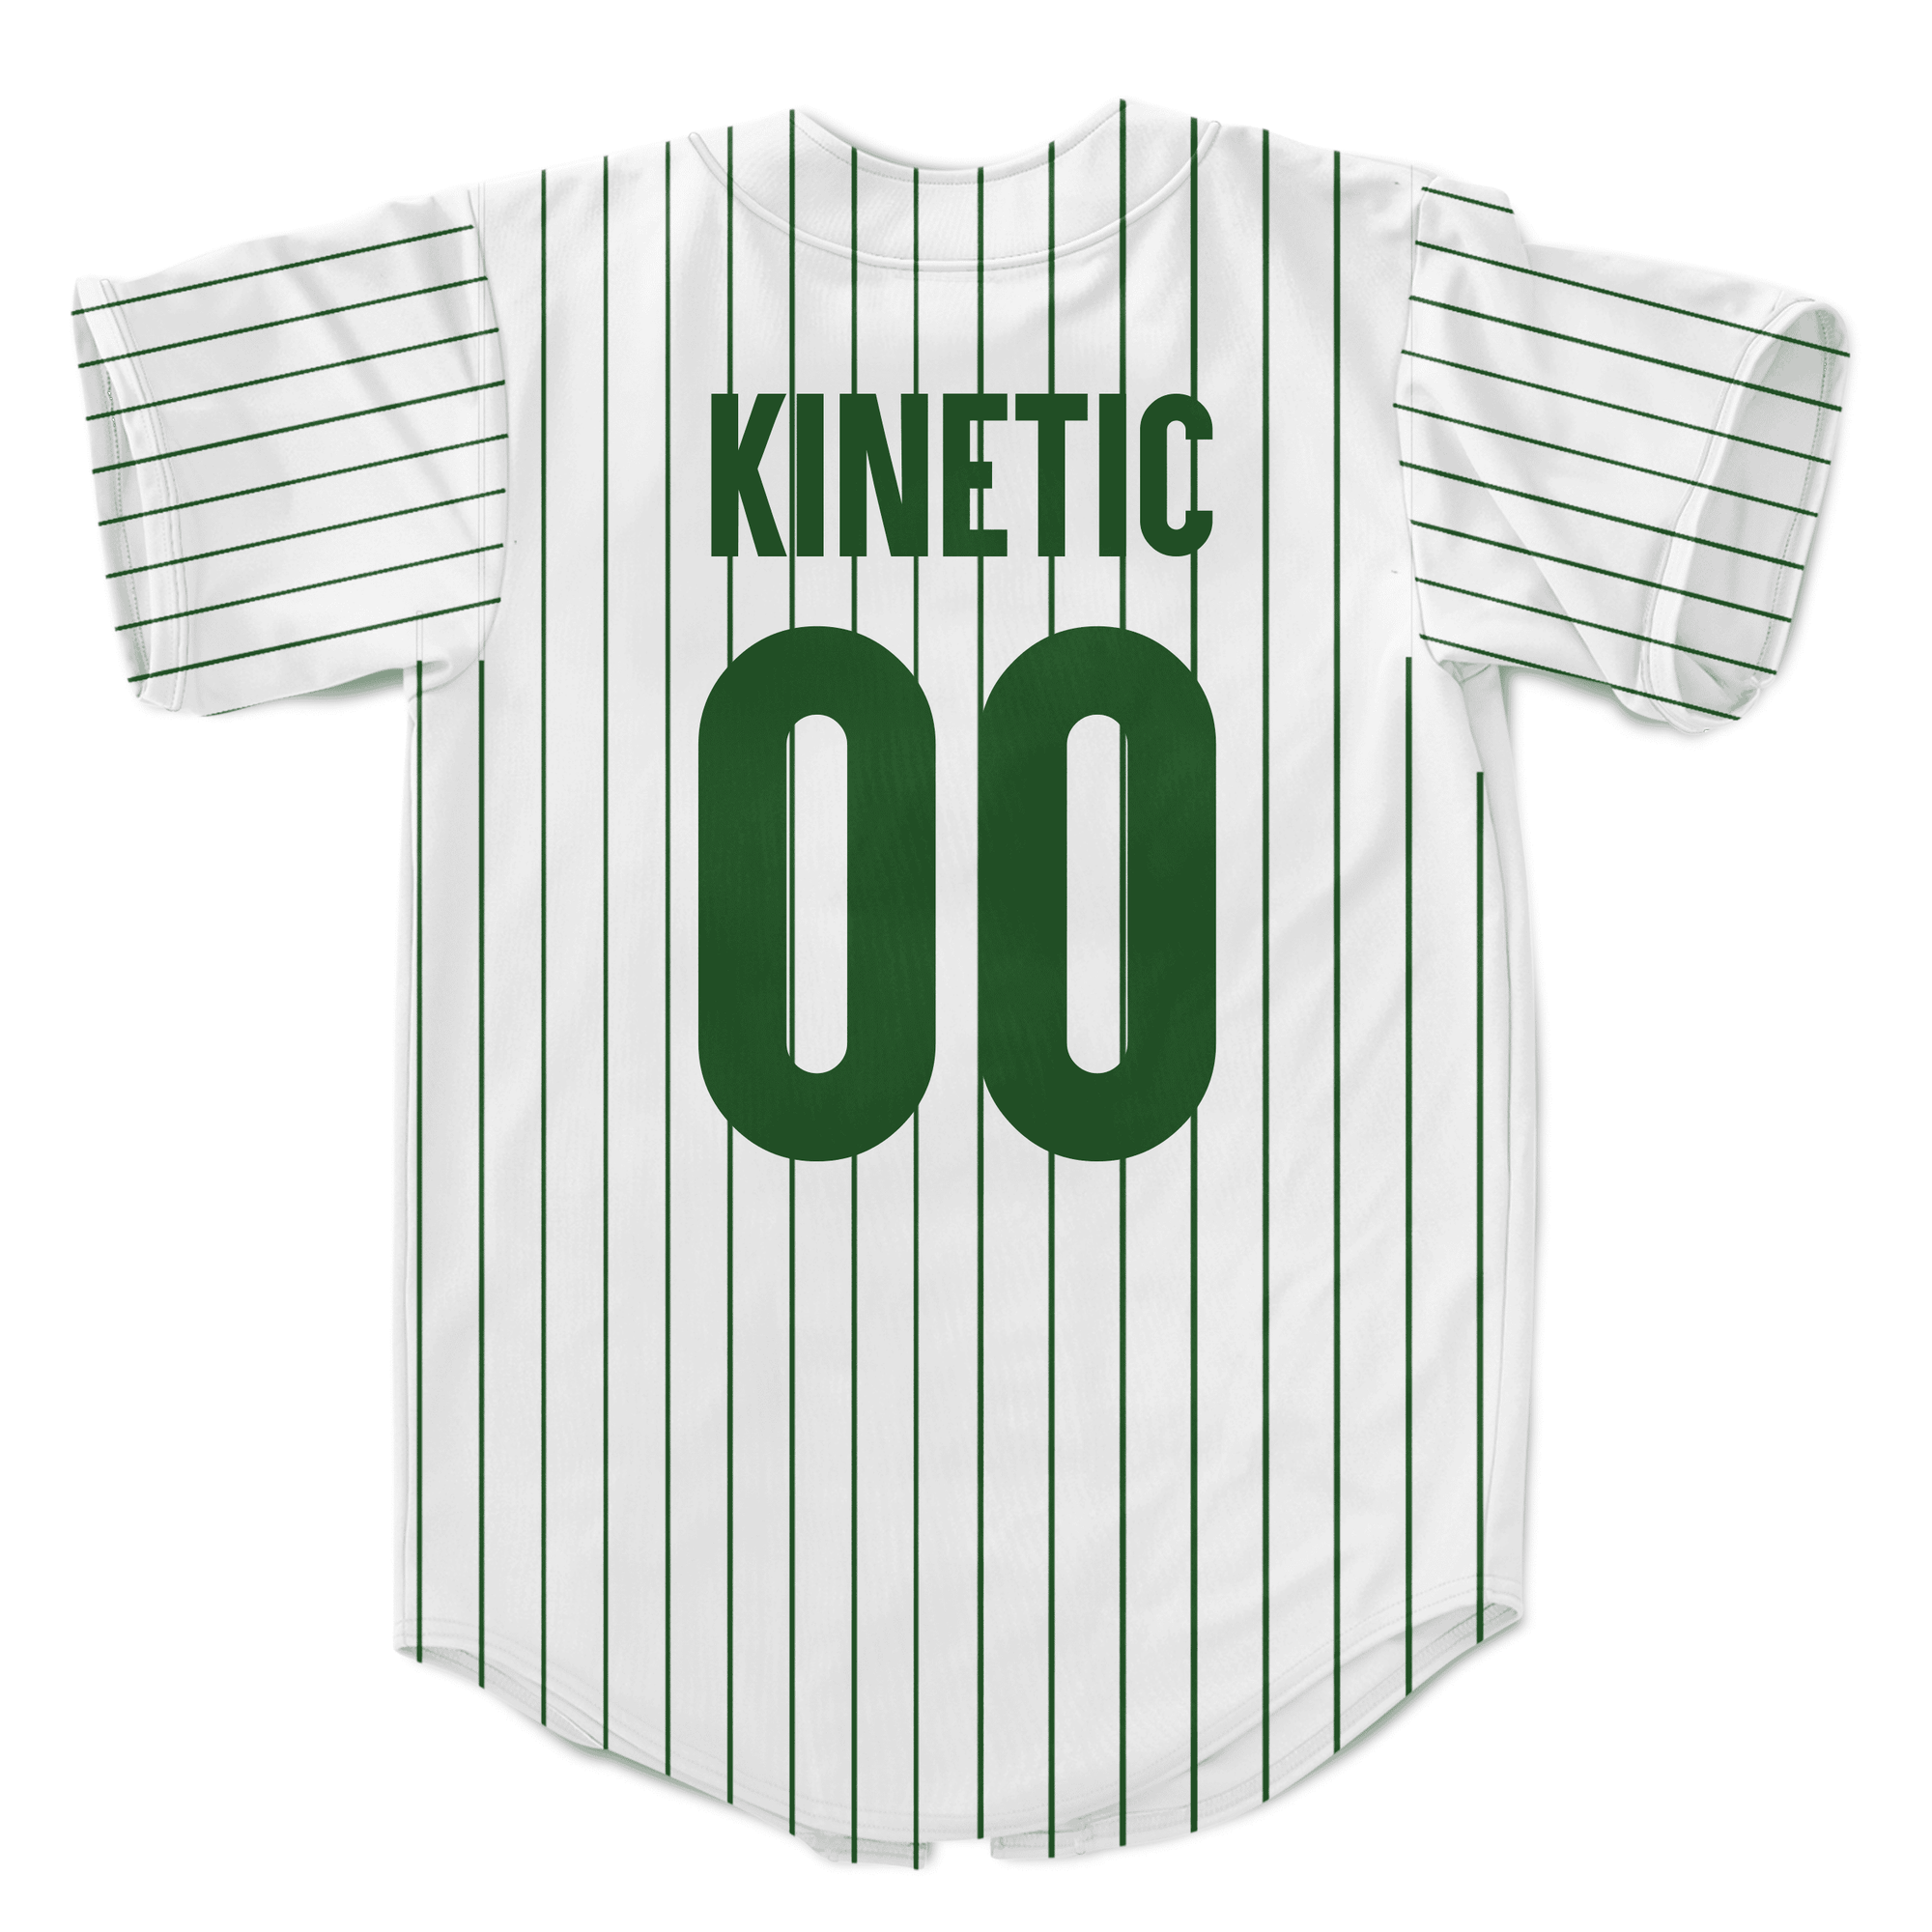 Phi Delta Theta - Green Pinstripe Baseball Jersey